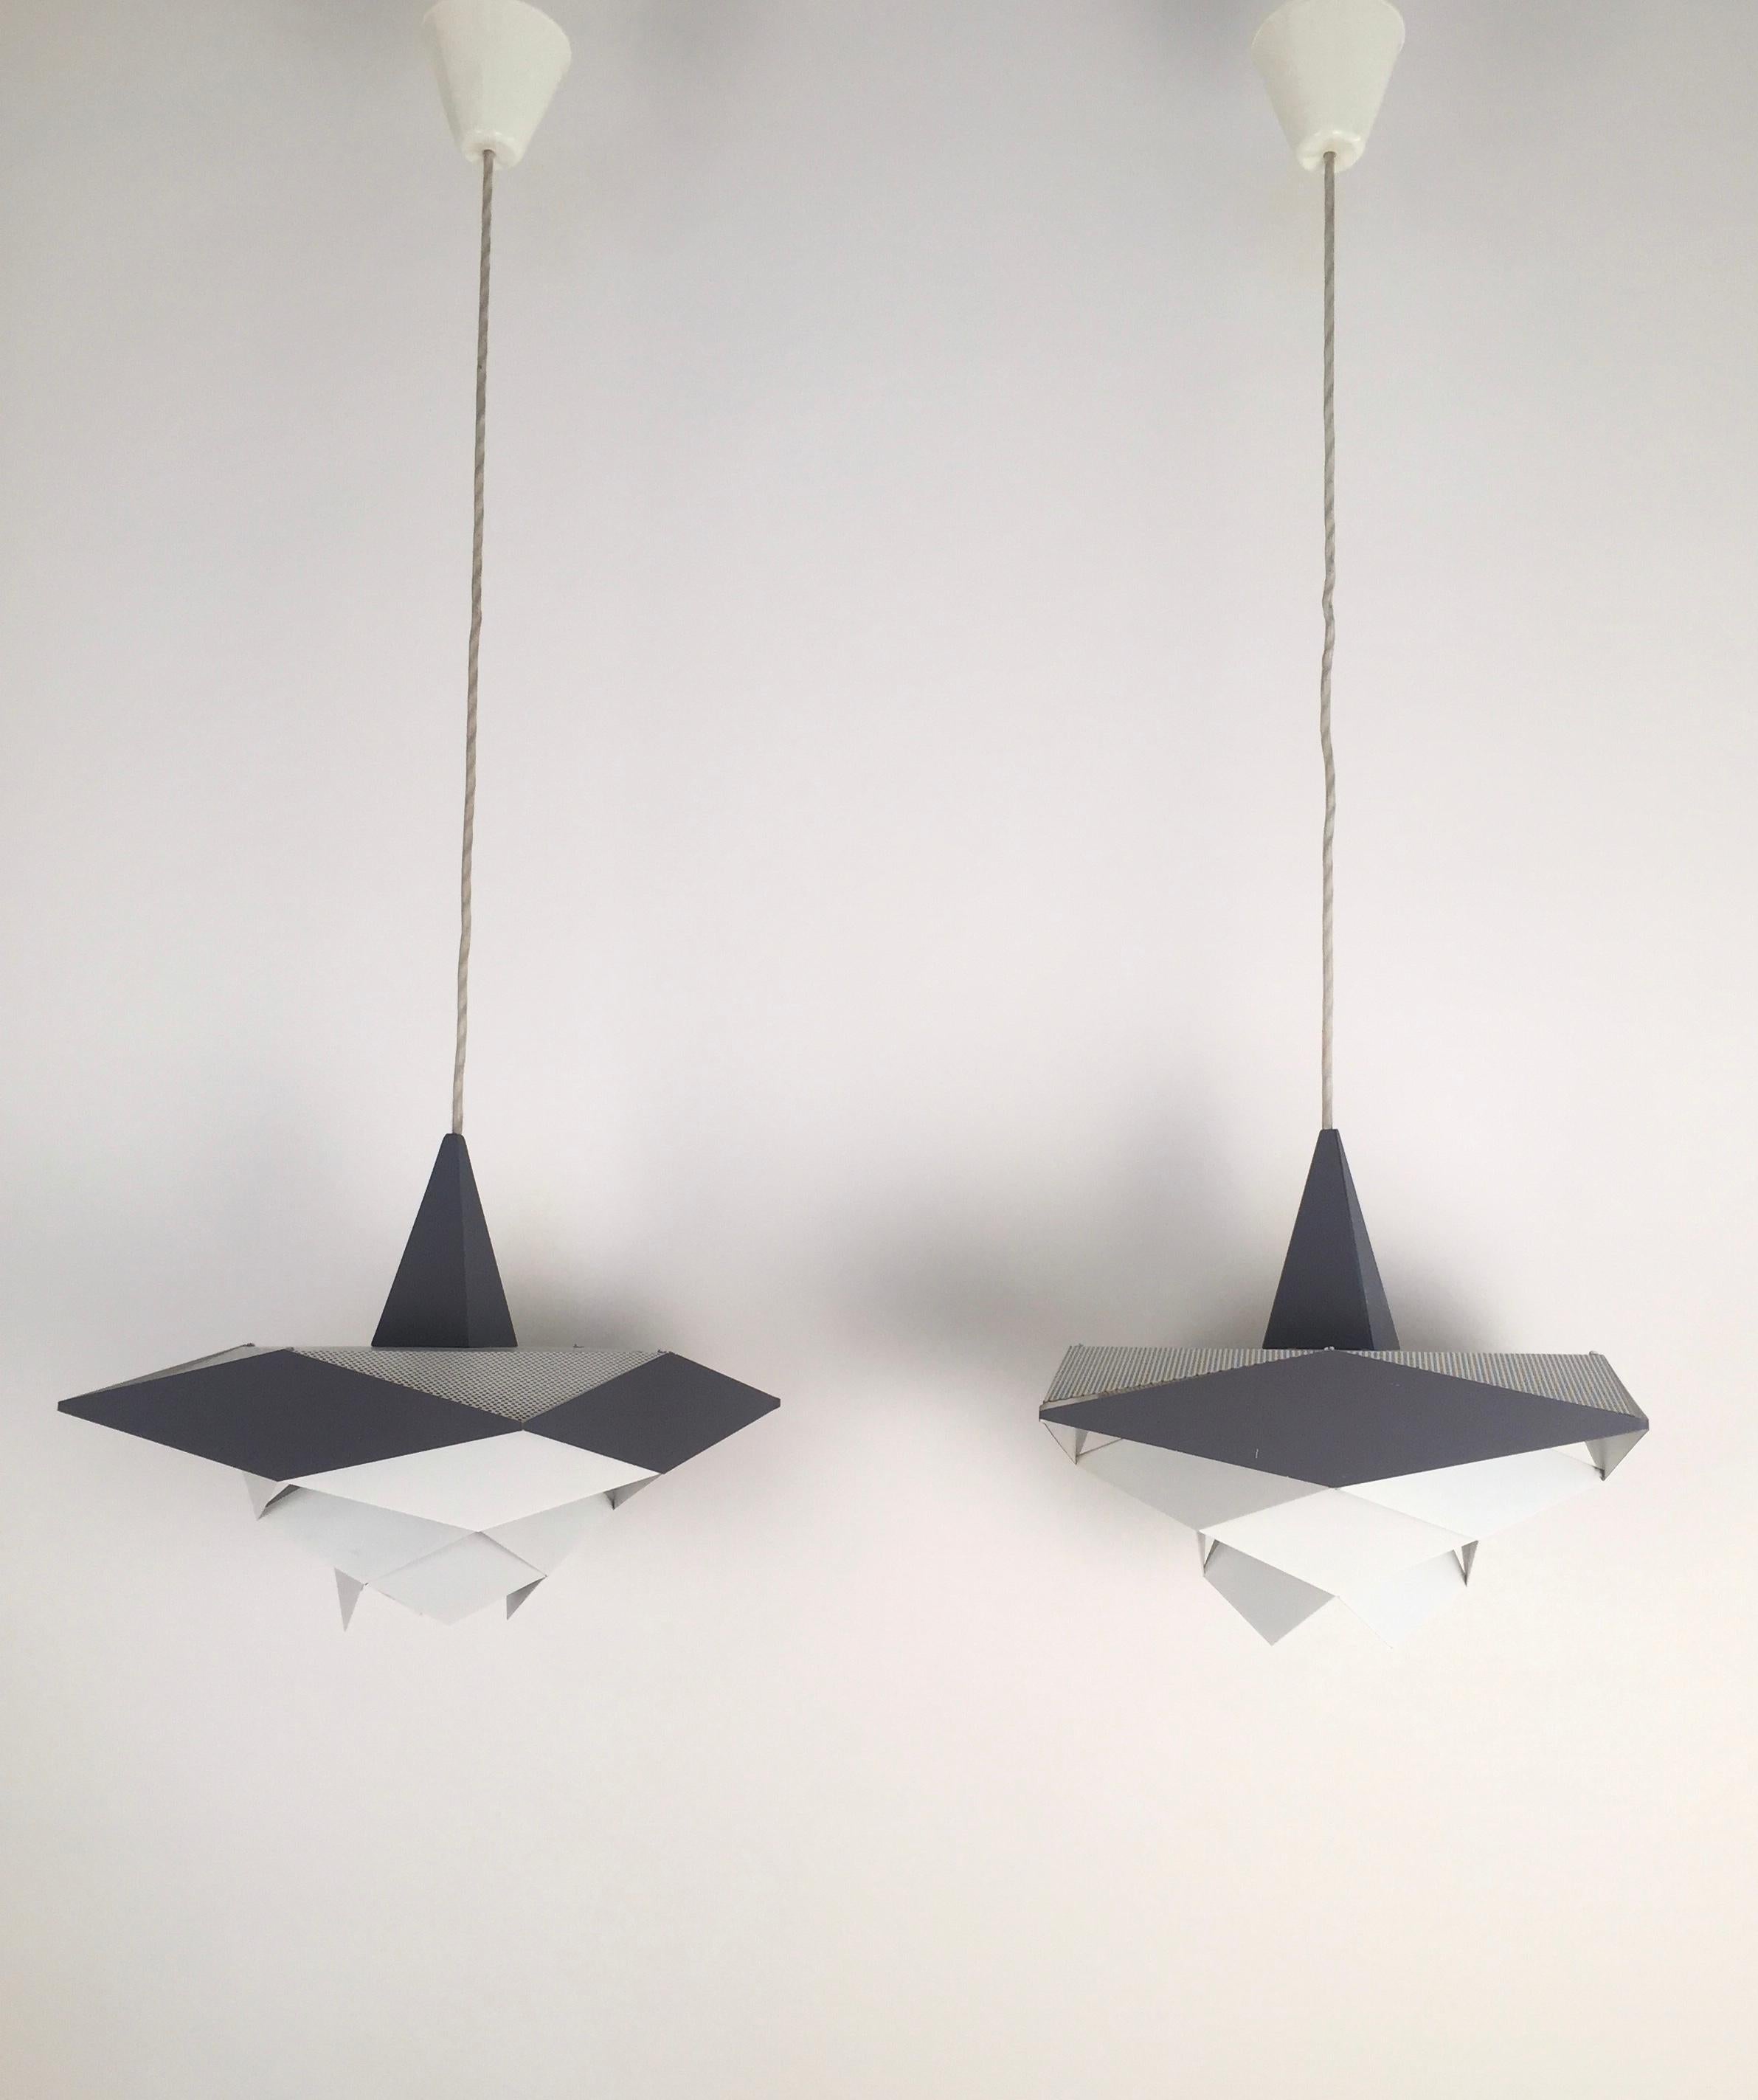 Preben Dahl Pair of Ceiling Lamps Model “Sinfoni” by Hans Folsgaard, 1960 For Sale 2